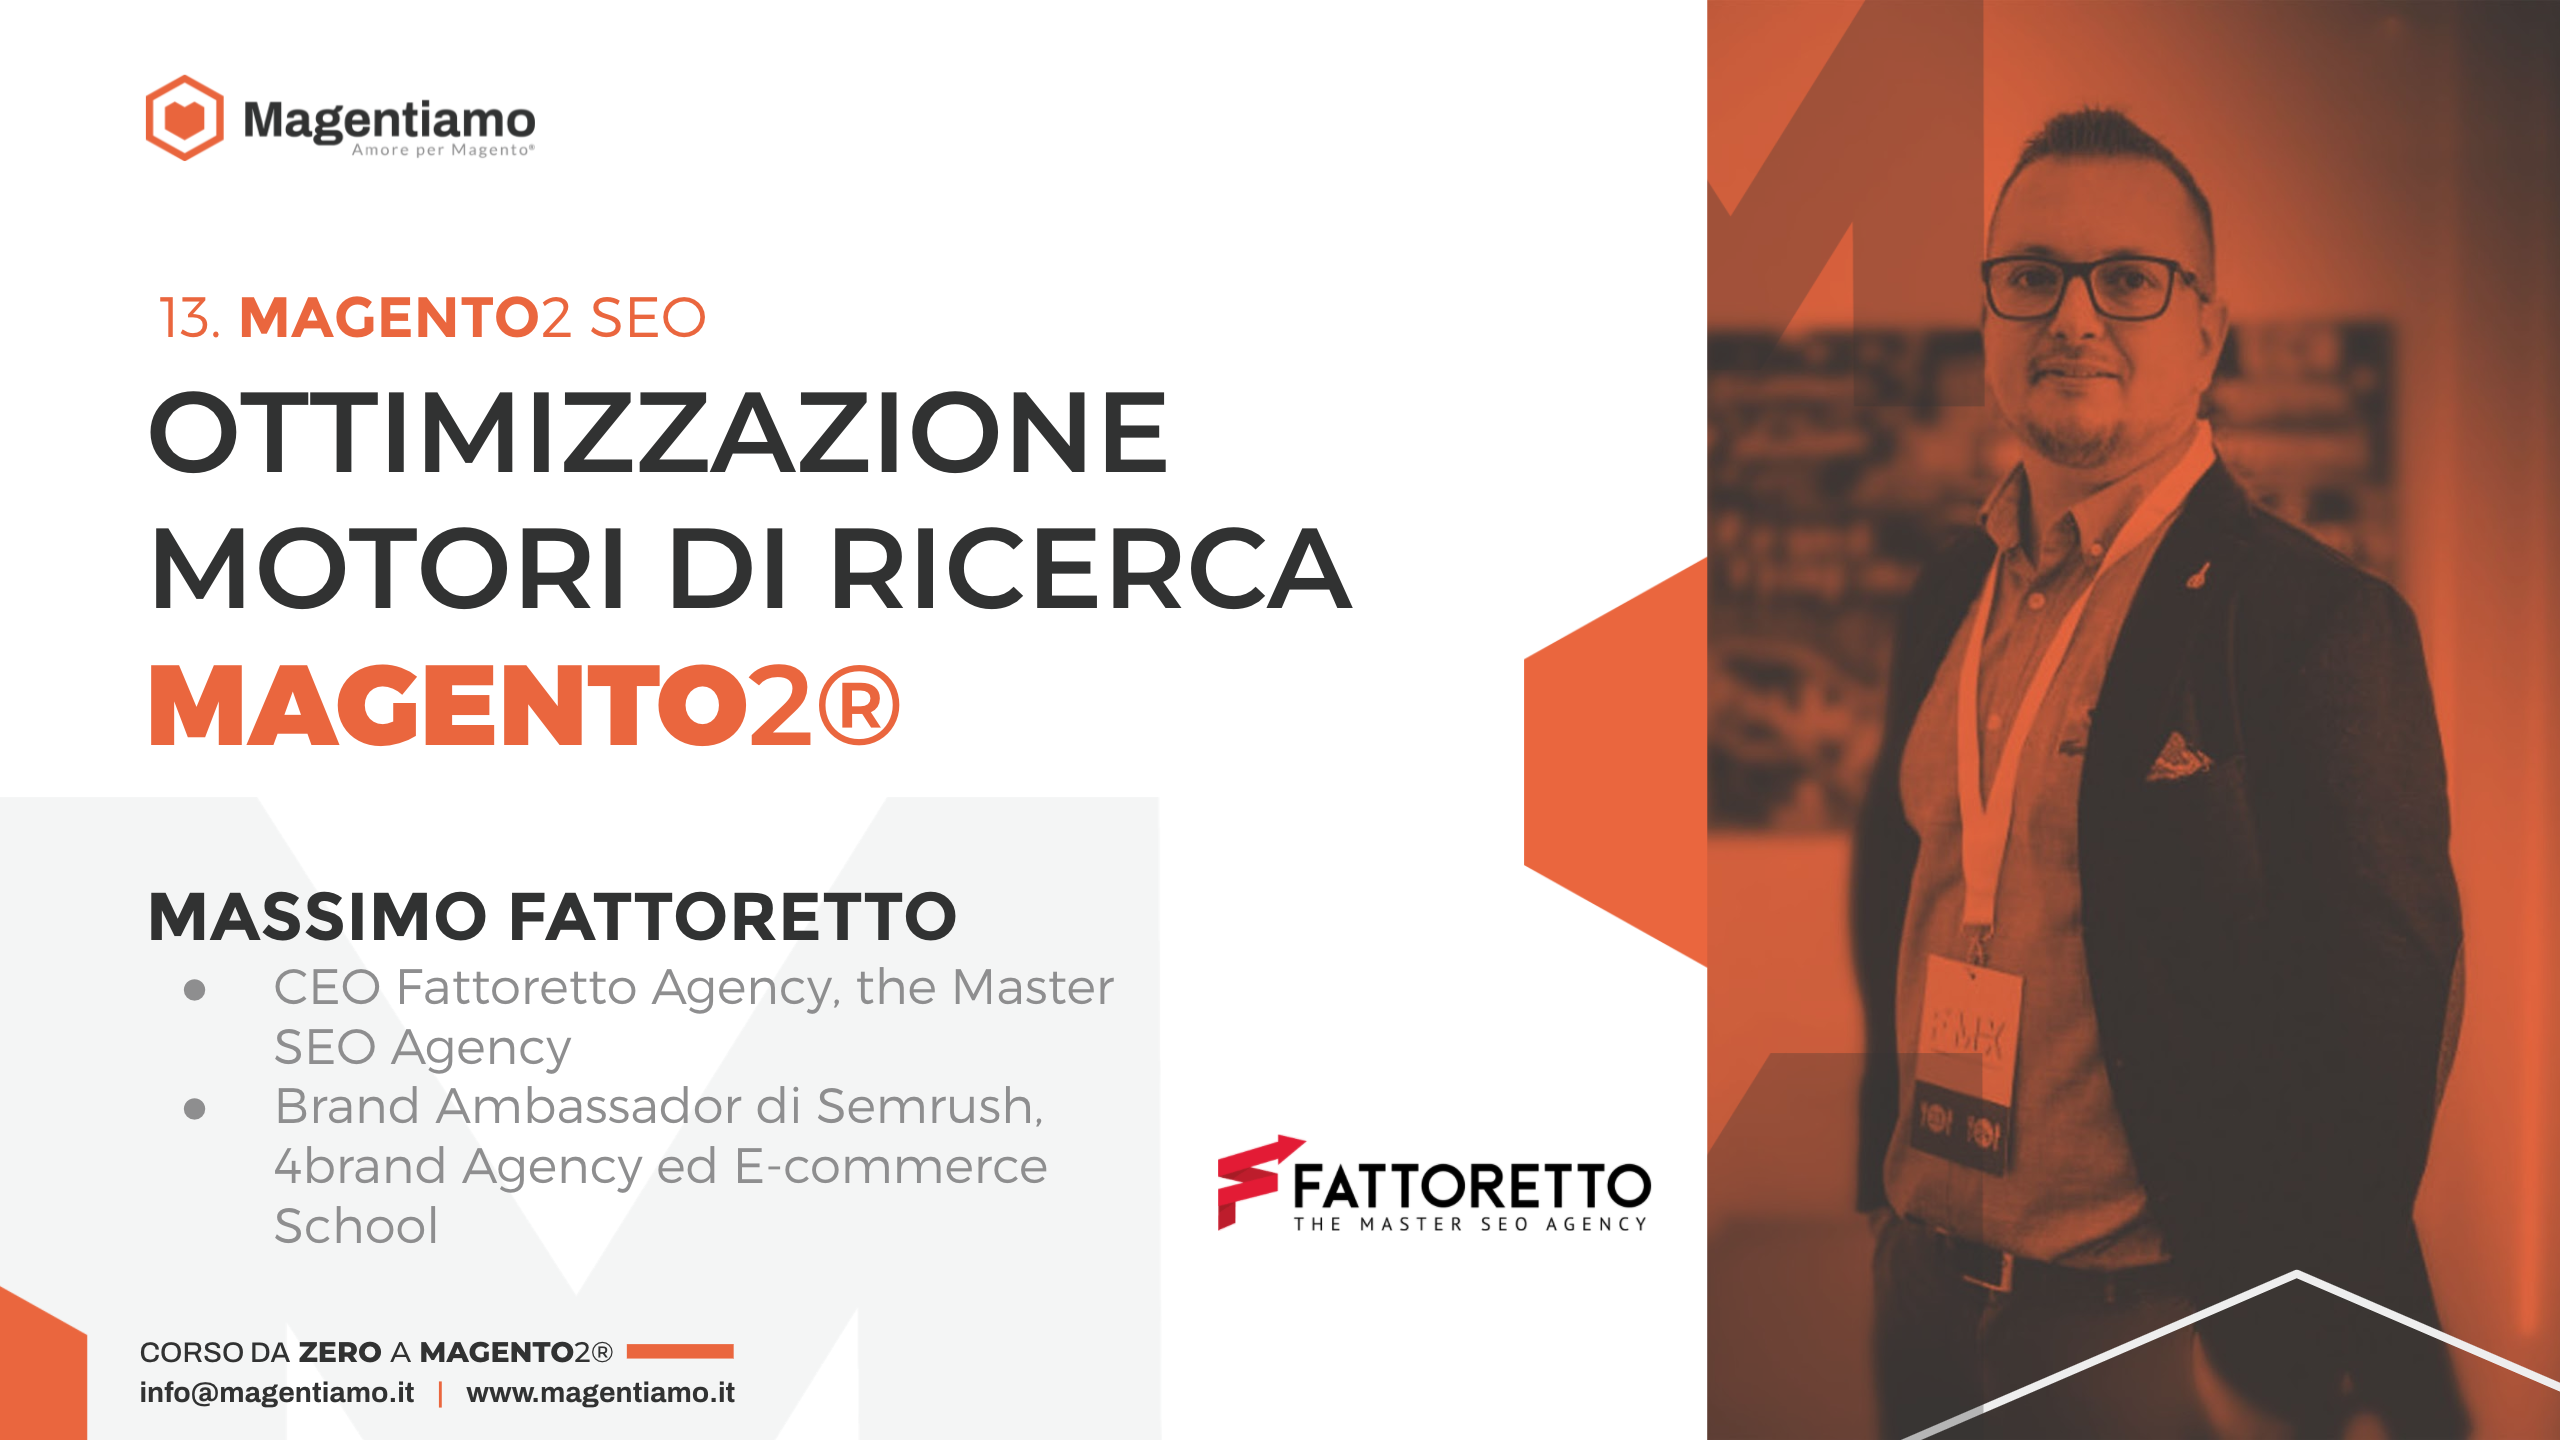 13. MARKETING - Strategie di marketing efficaci per Magento 2 Francesco Albanese